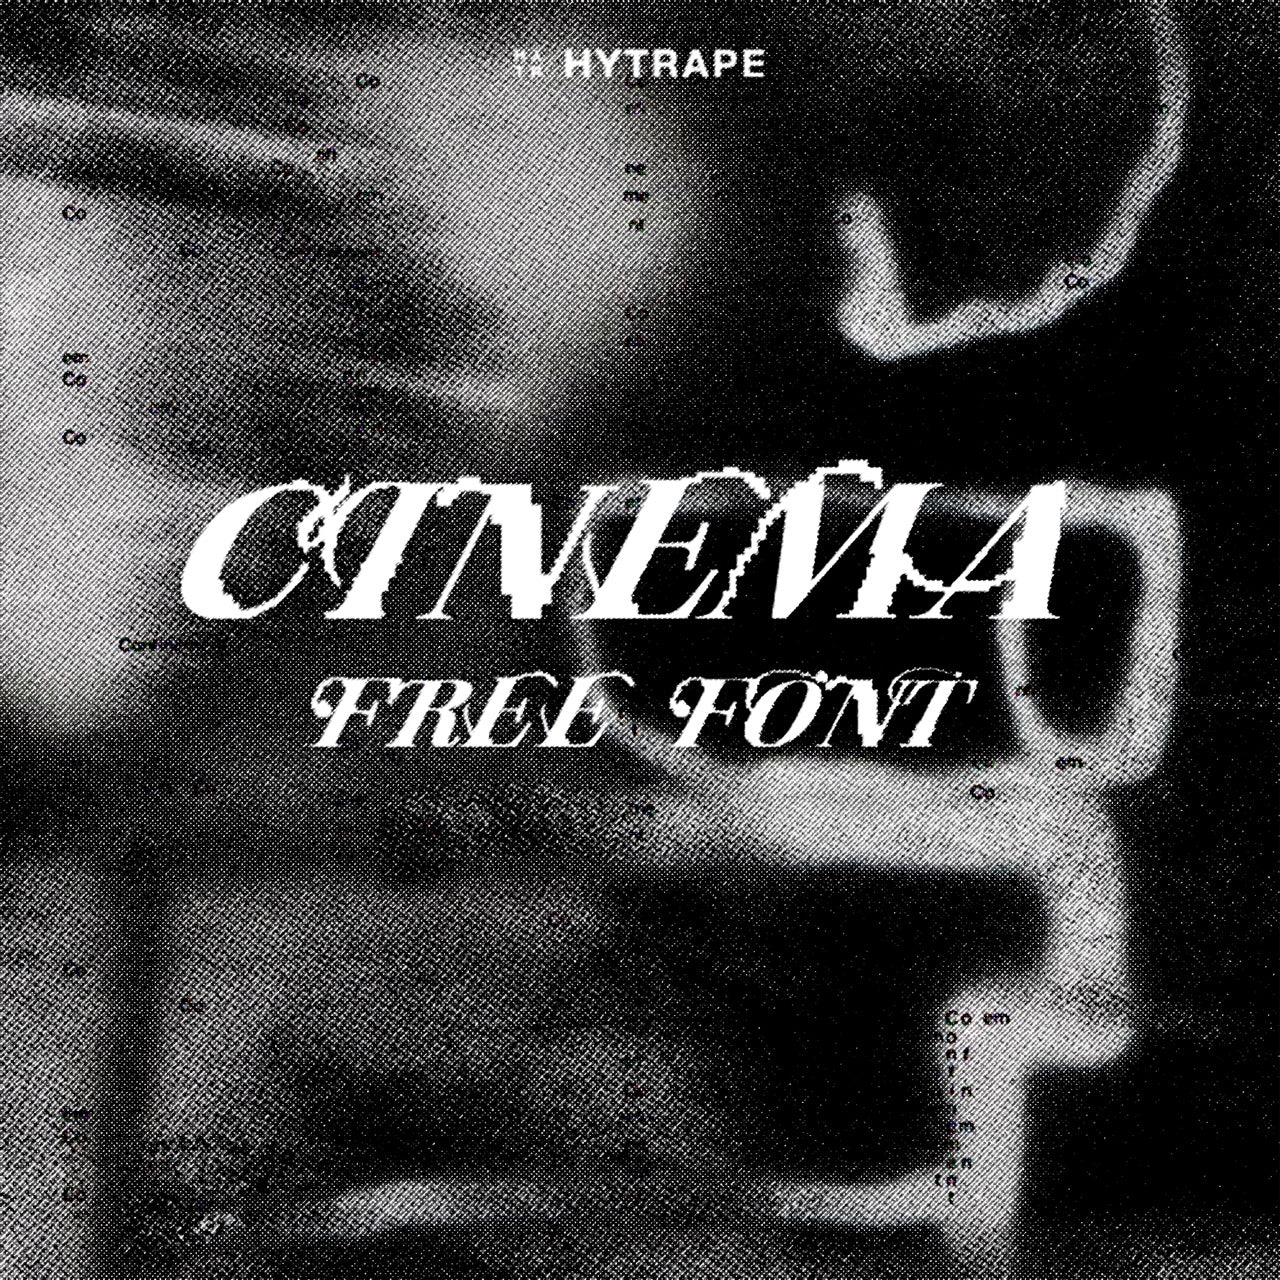 CINEMA FONT (FREE) HYTRAPE